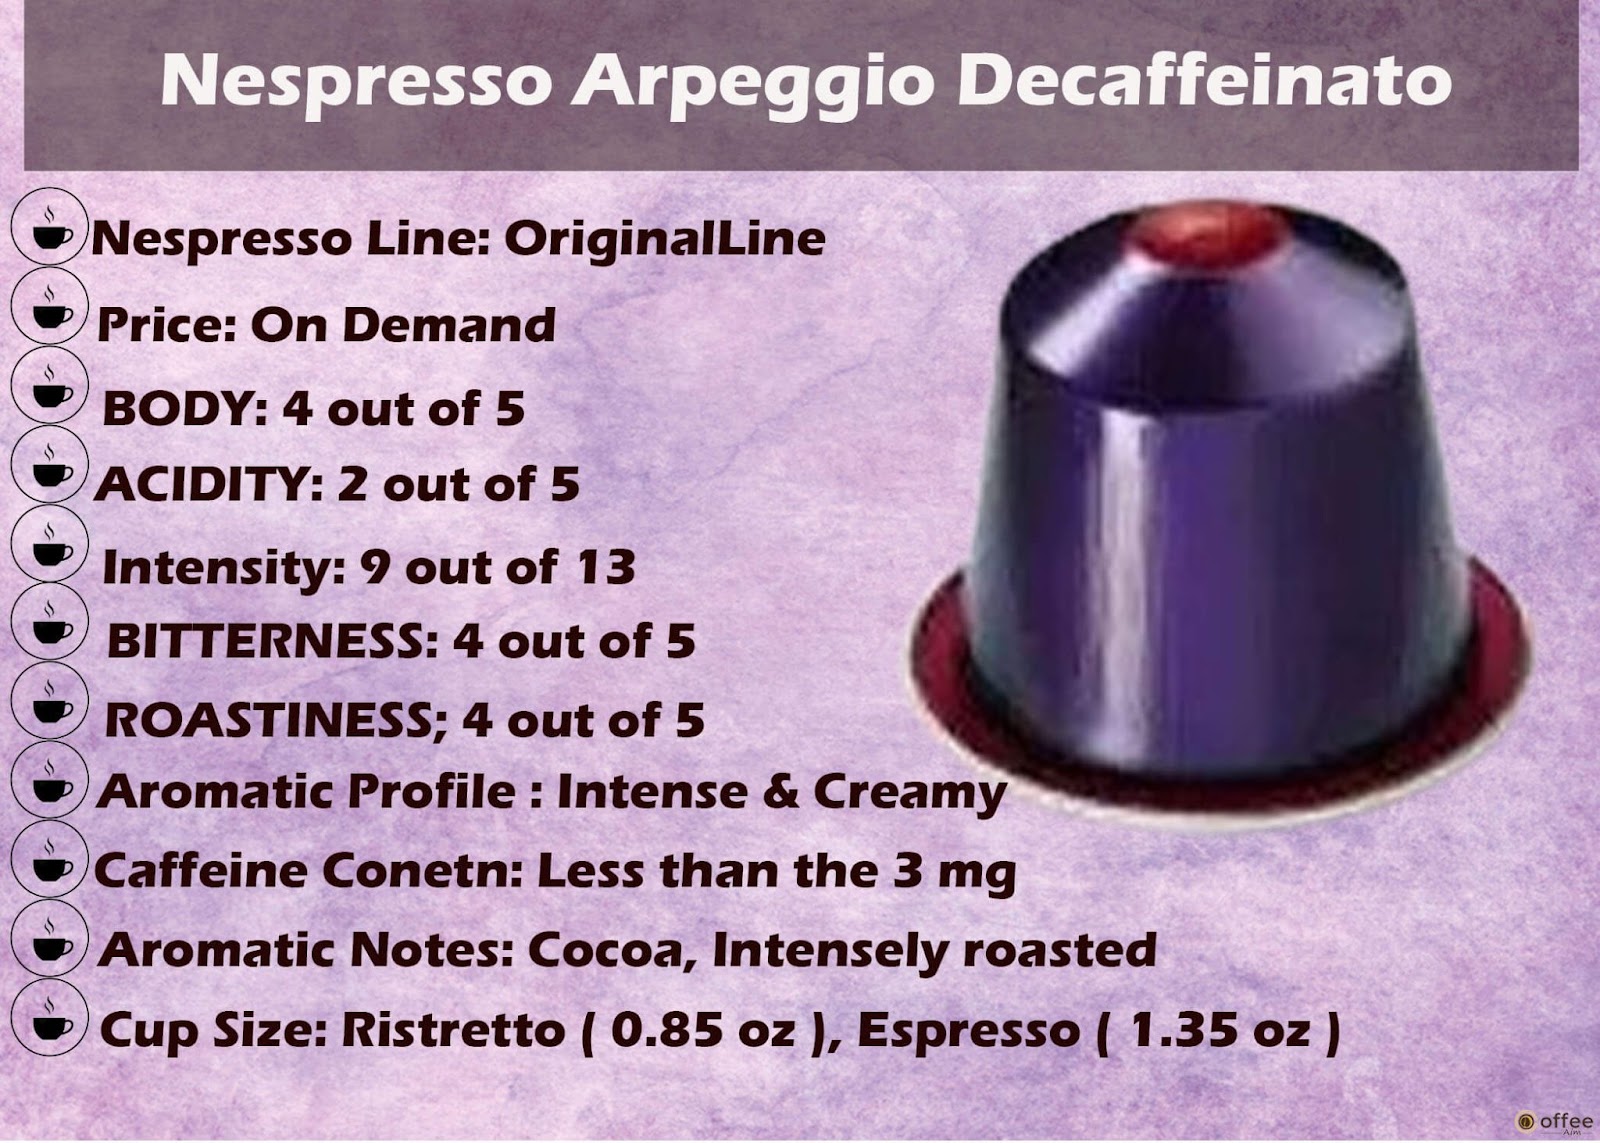 Features Chart of Nespresso Decaffeinato Firenze Arpeggio Original Line Capsule.